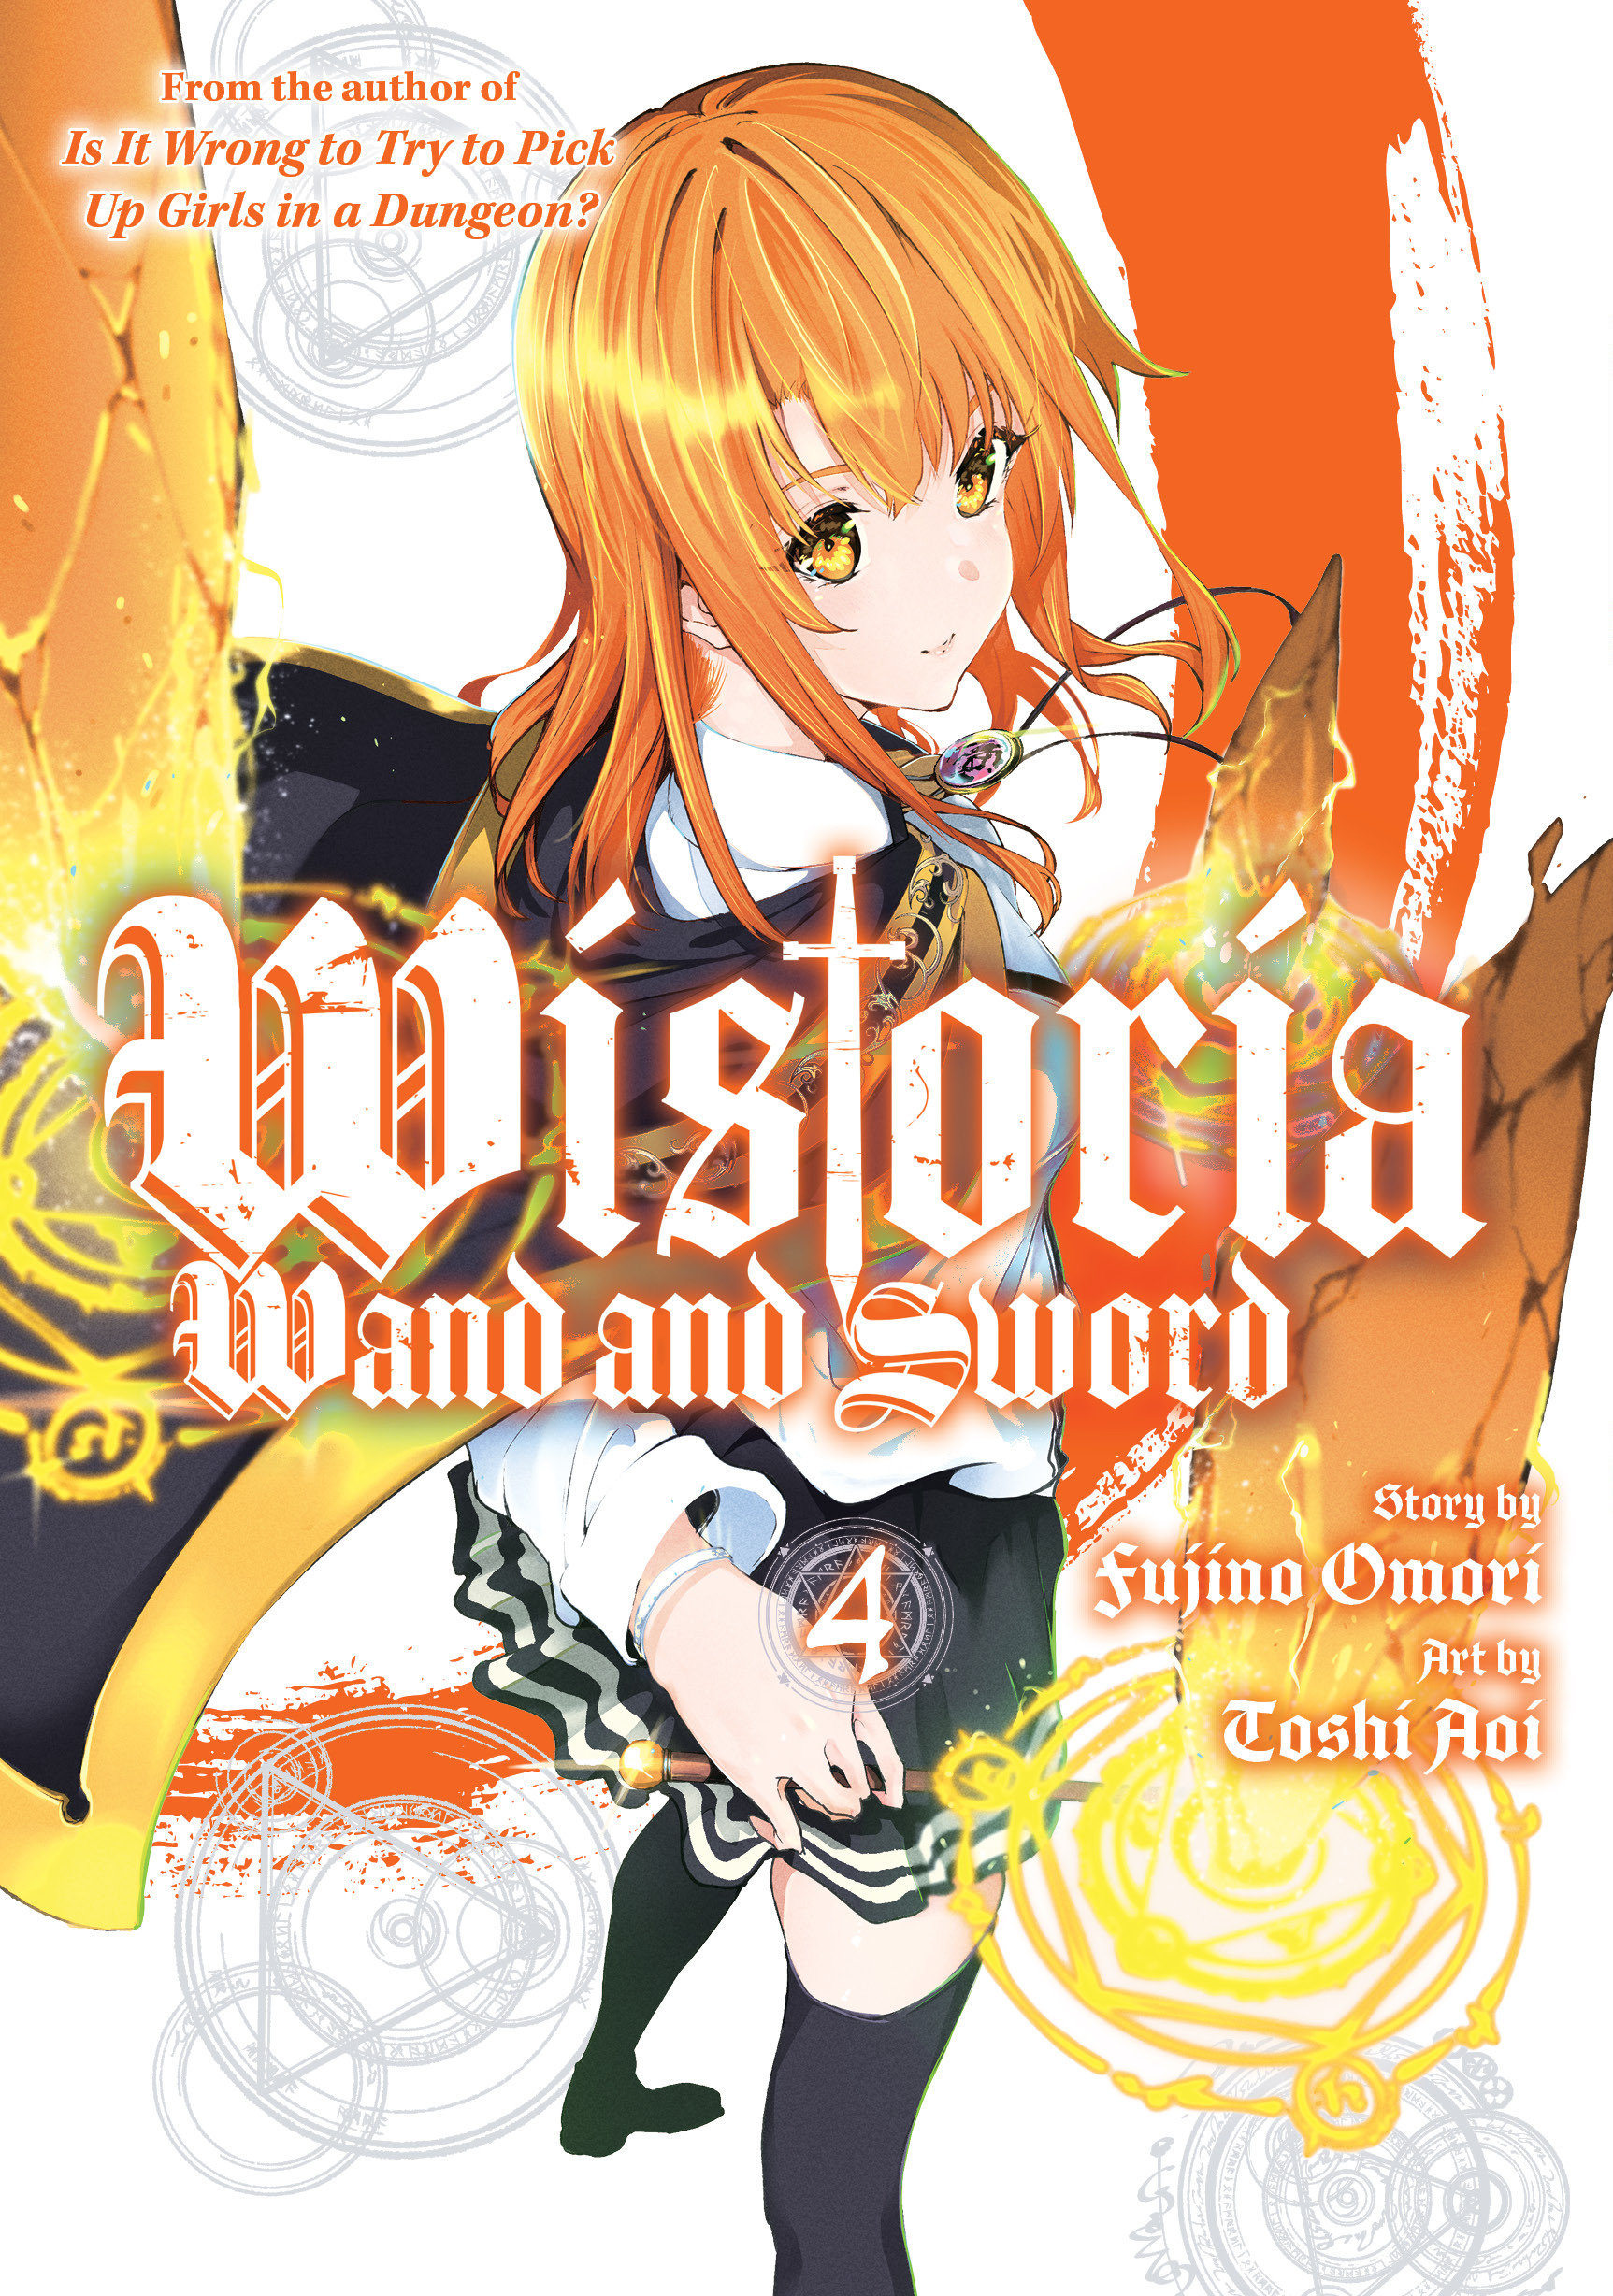 Wistoria Wand & Sword Manga Volume 4